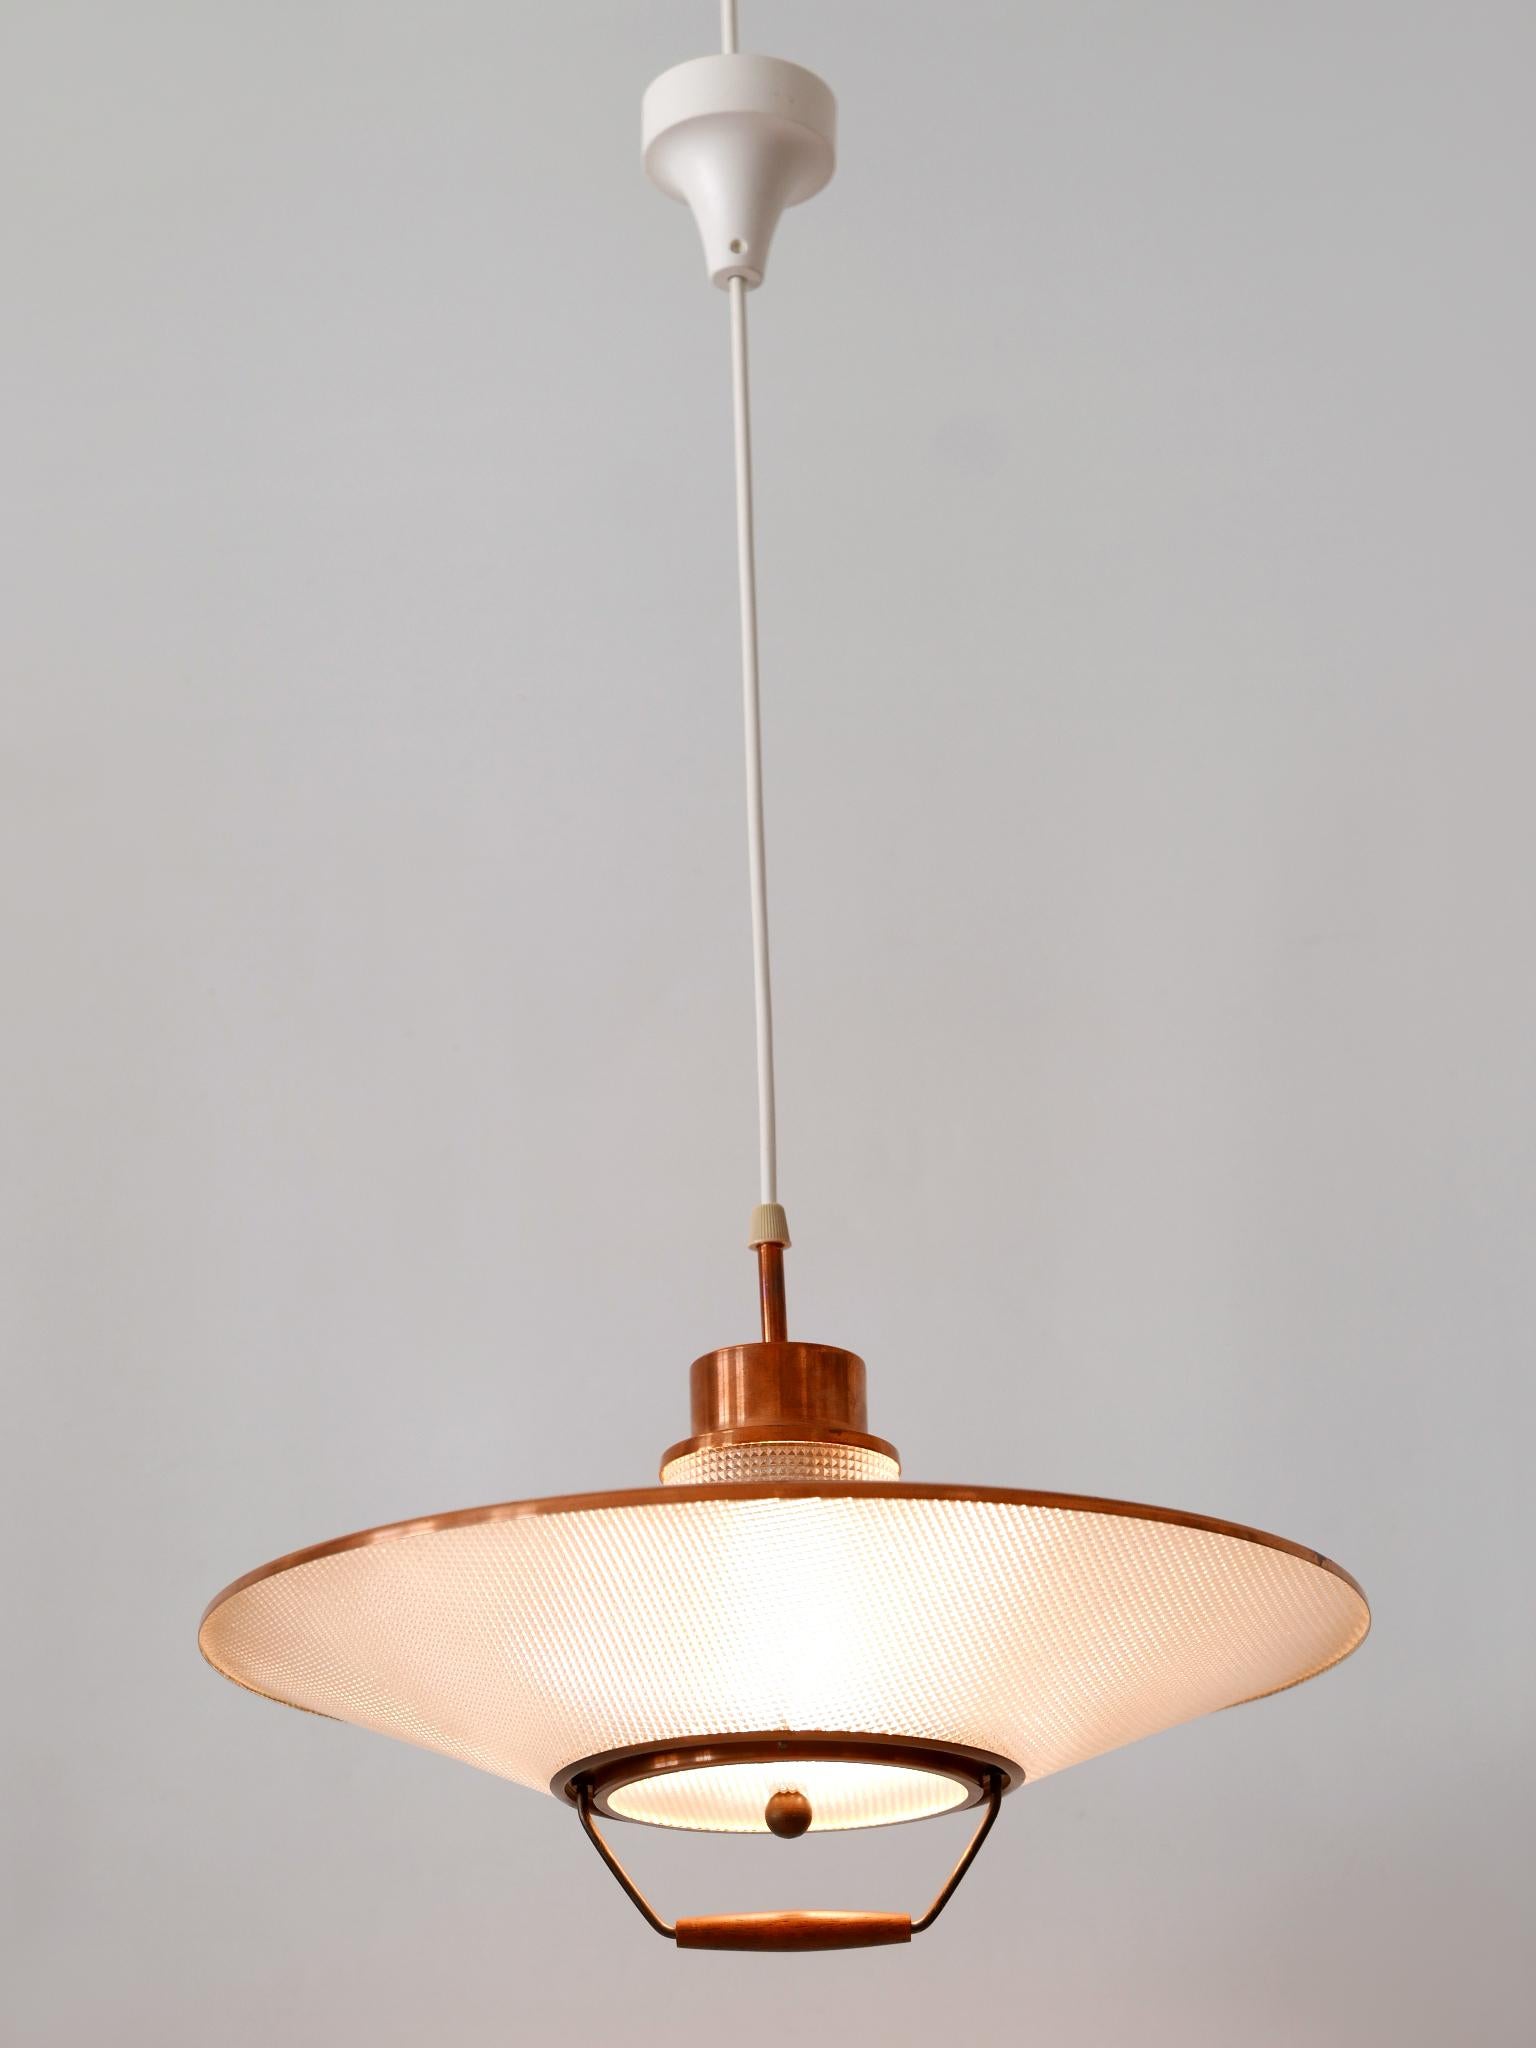 Rare Mid-Century Modern Scandinavian Copper Pendant Lamp or Hanging Light 1960s  For Sale 8